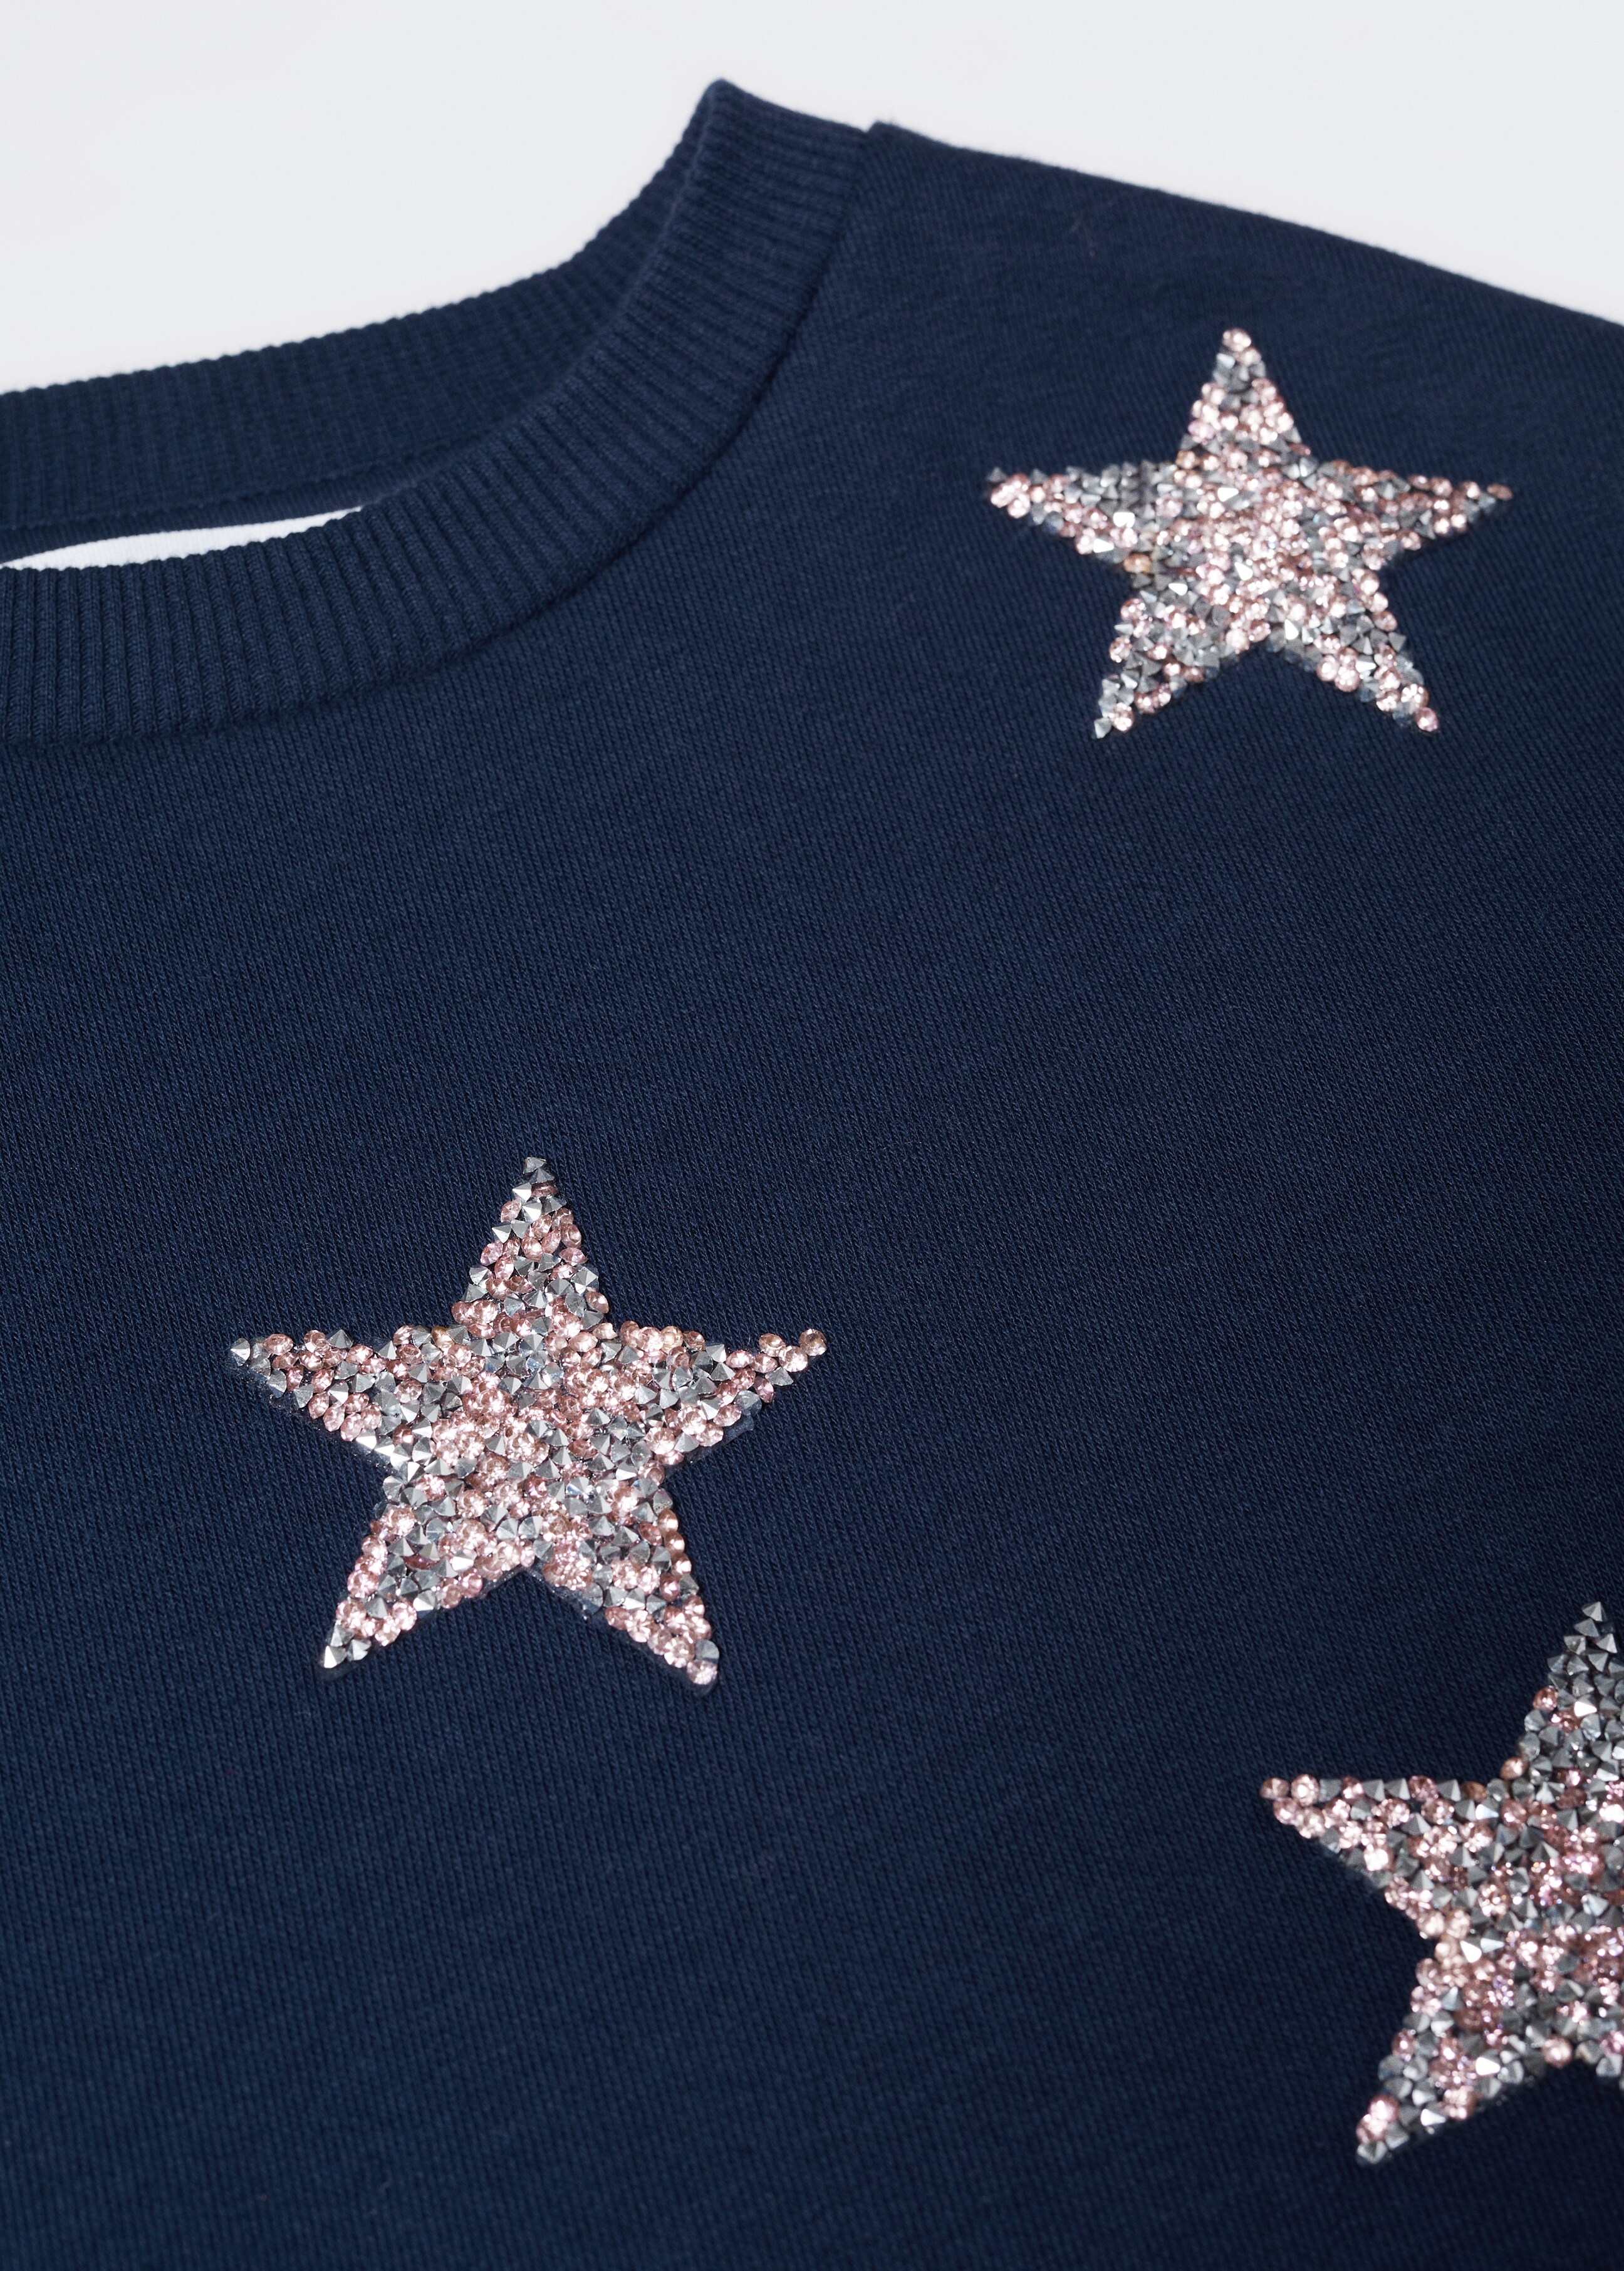 Stars beaded sweatshirt - Details of the article 8